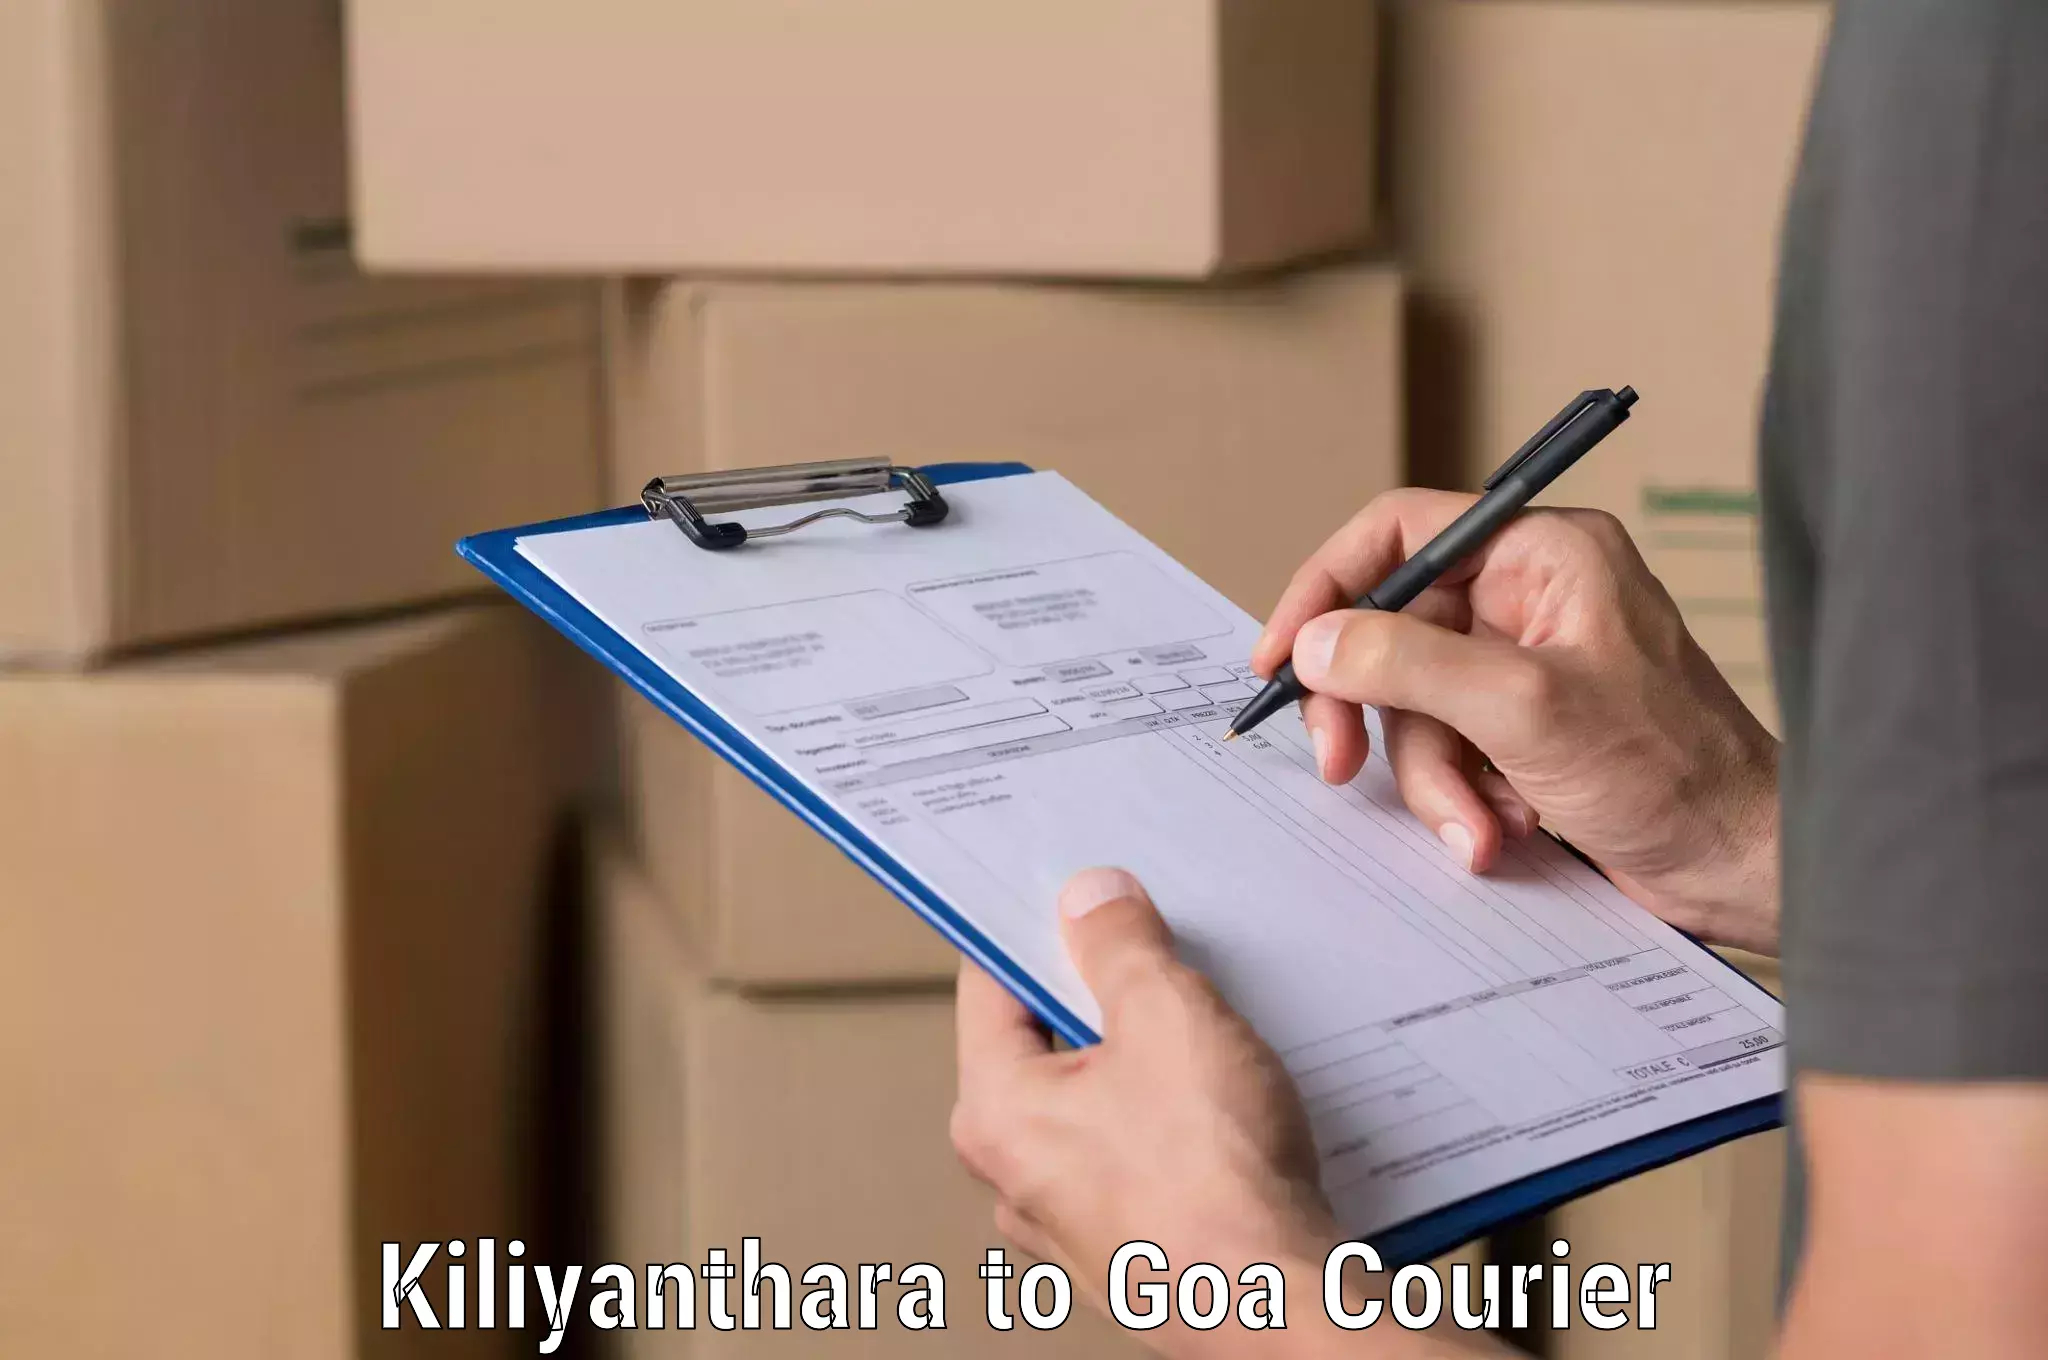 Global courier networks Kiliyanthara to Goa